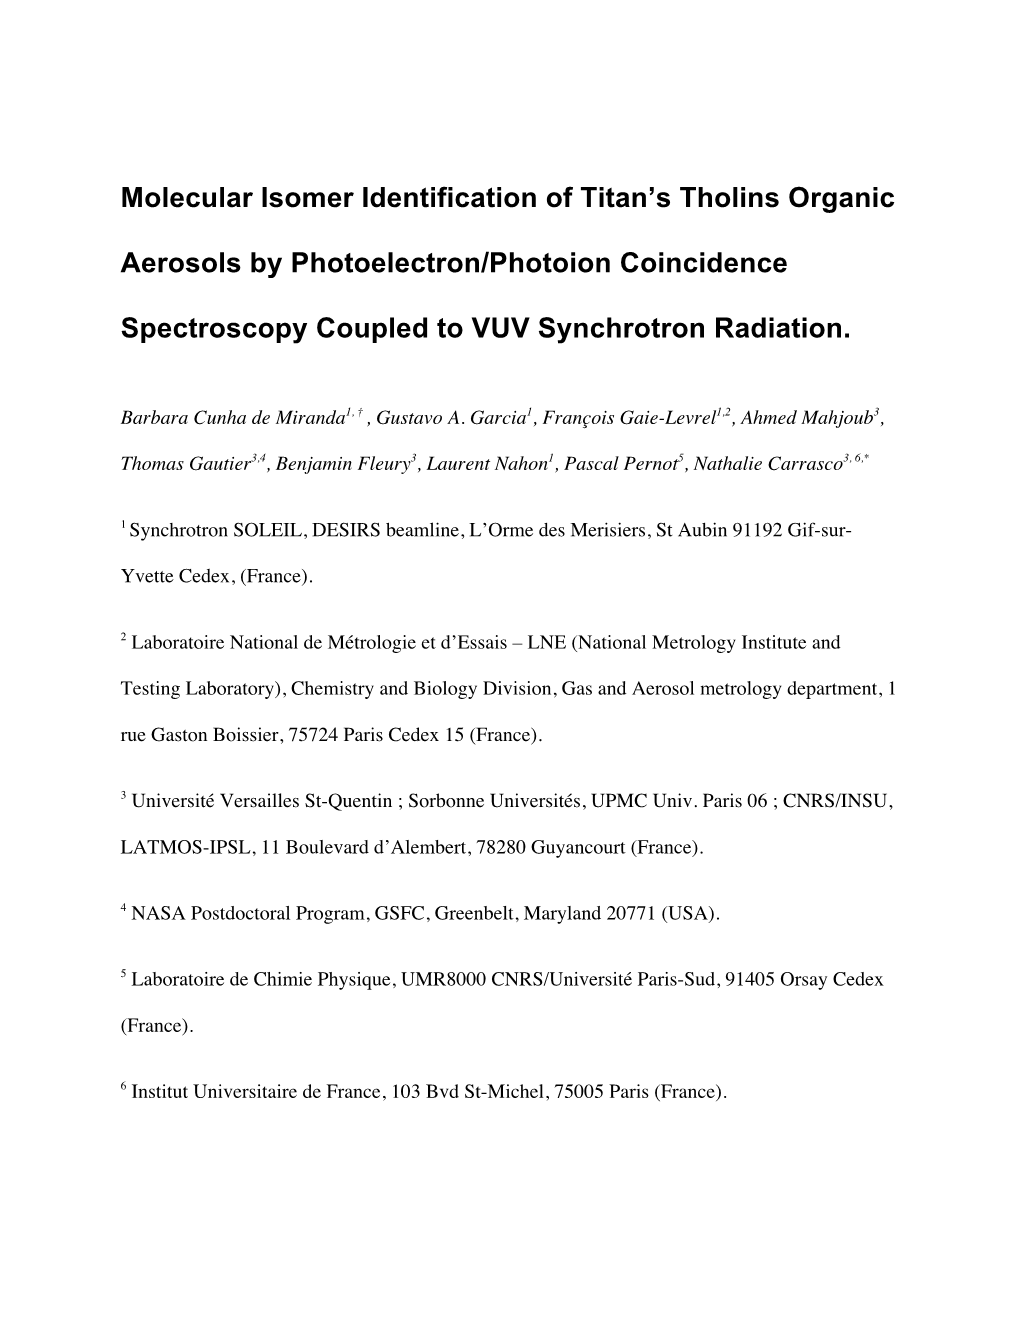 Molecular Isomer Identification of Titan's Tholins Organic Aerosols by Photoelectron/Photoion Coincidence Spectroscopy Coupled